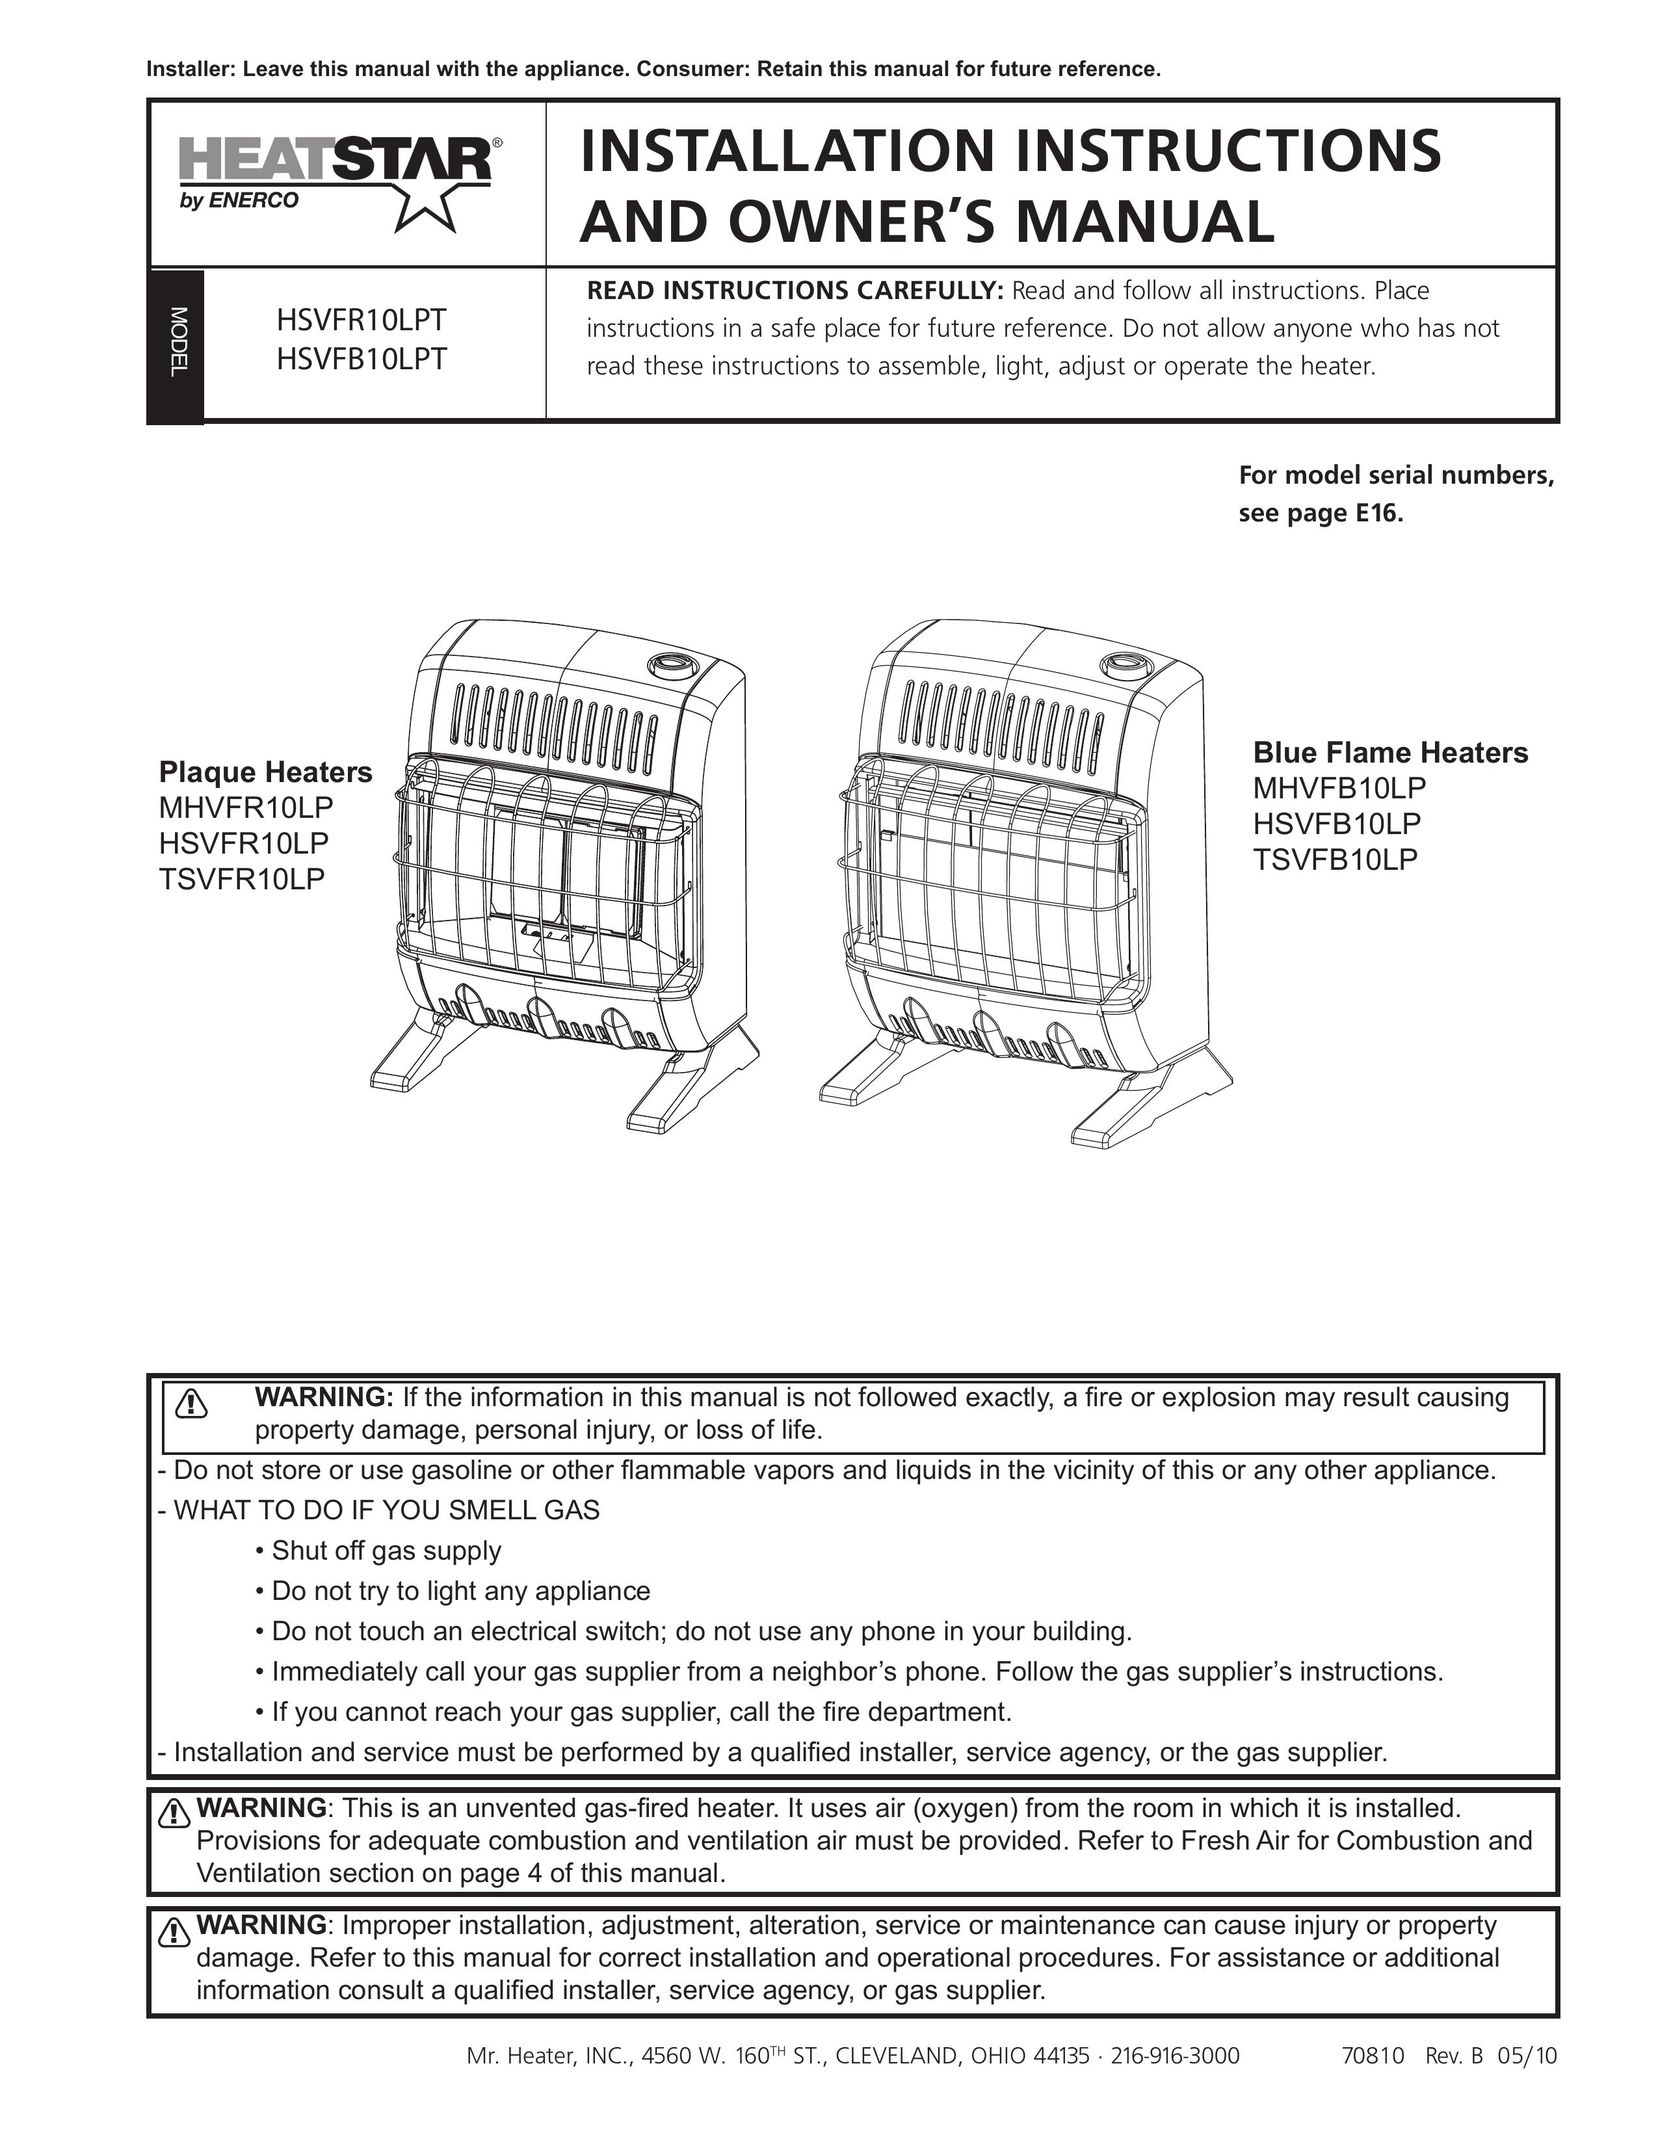 Enerco HSVFR10LP Gas Heater User Manual